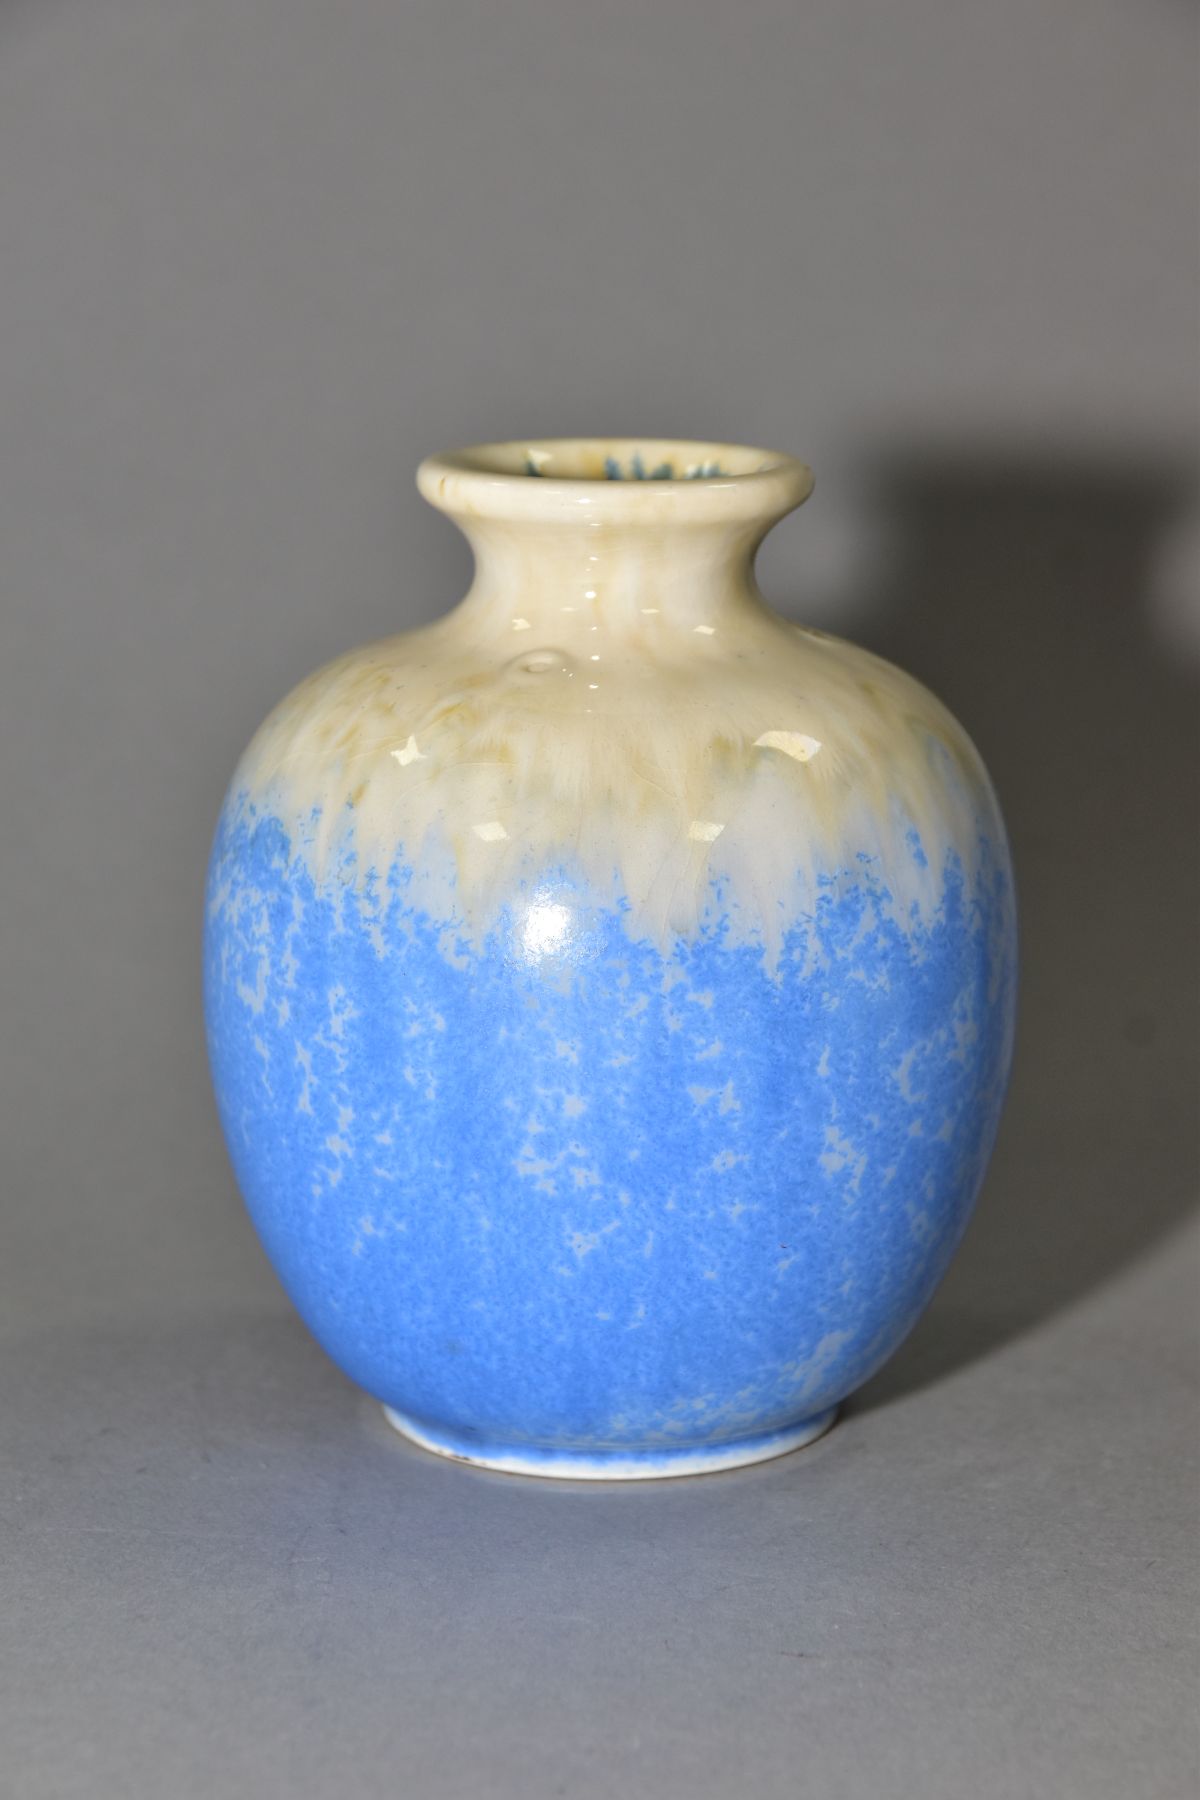 RUSKIN POTTERY, a globular vase with blue crystalline and cream glazes, impressed Ruskin England,